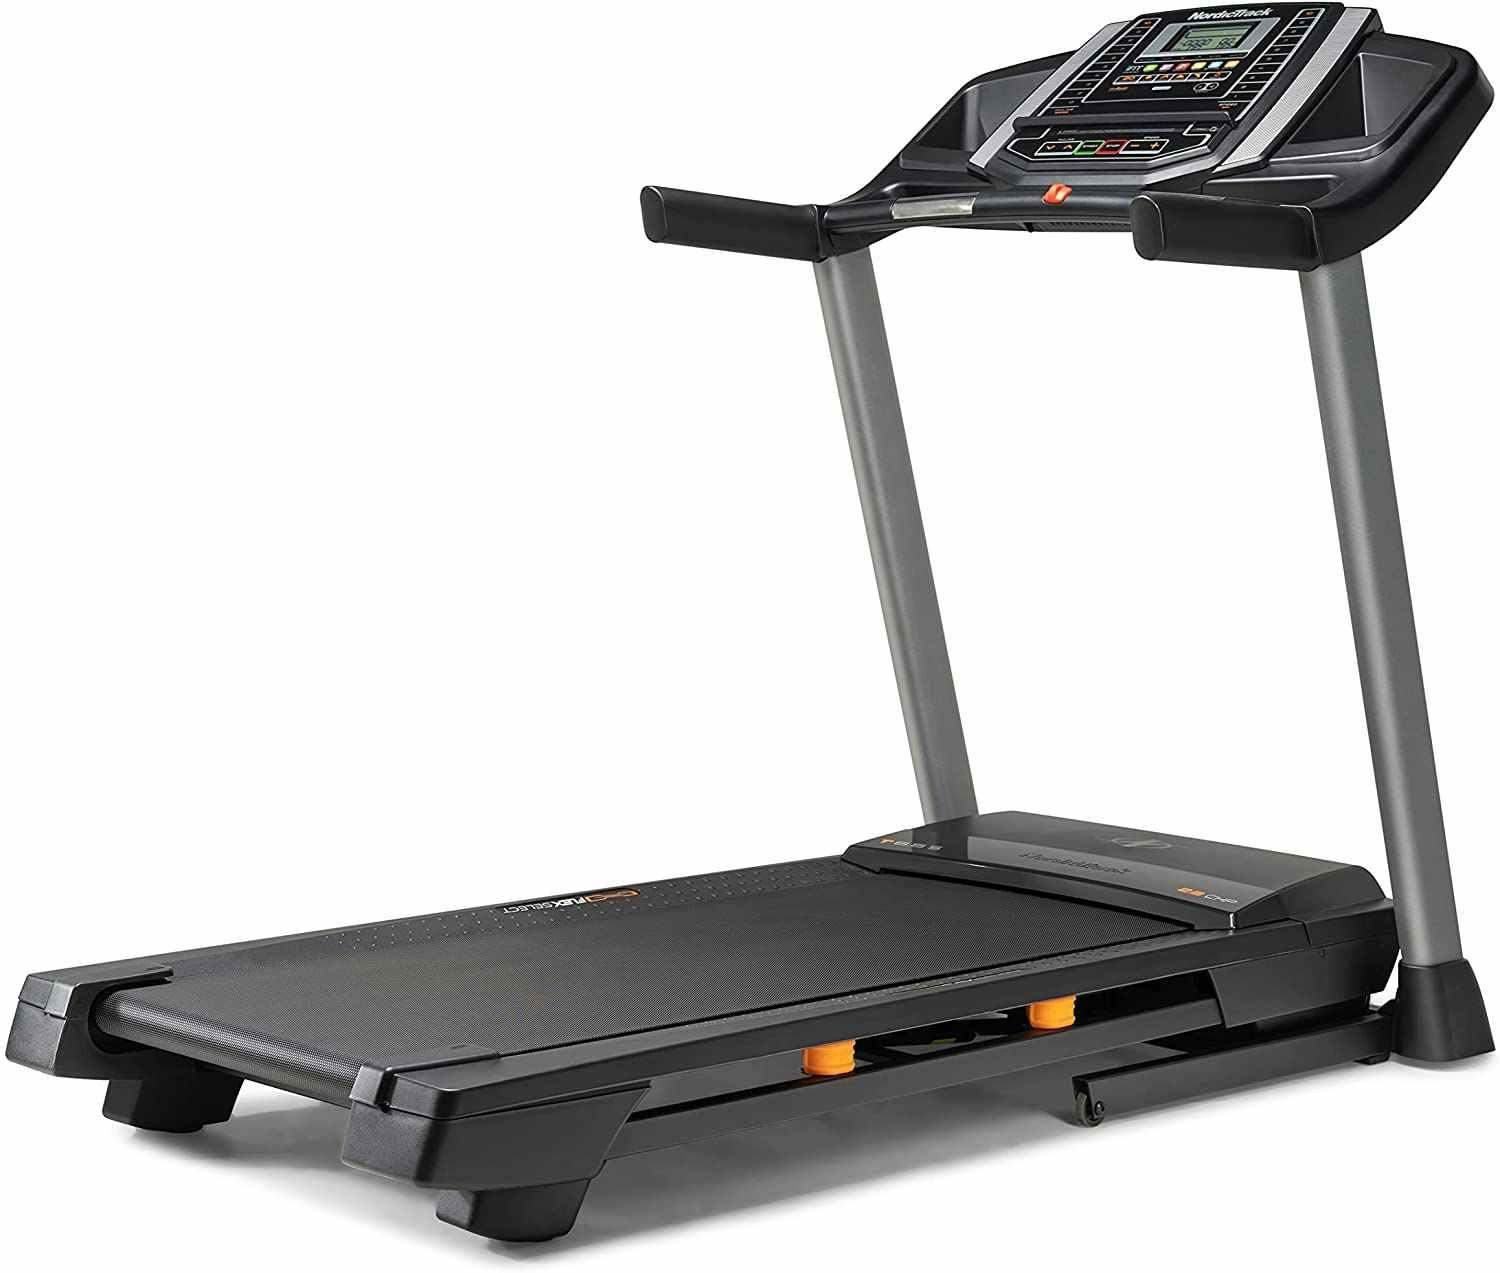 A NordicTrack T Series Treadmill in black